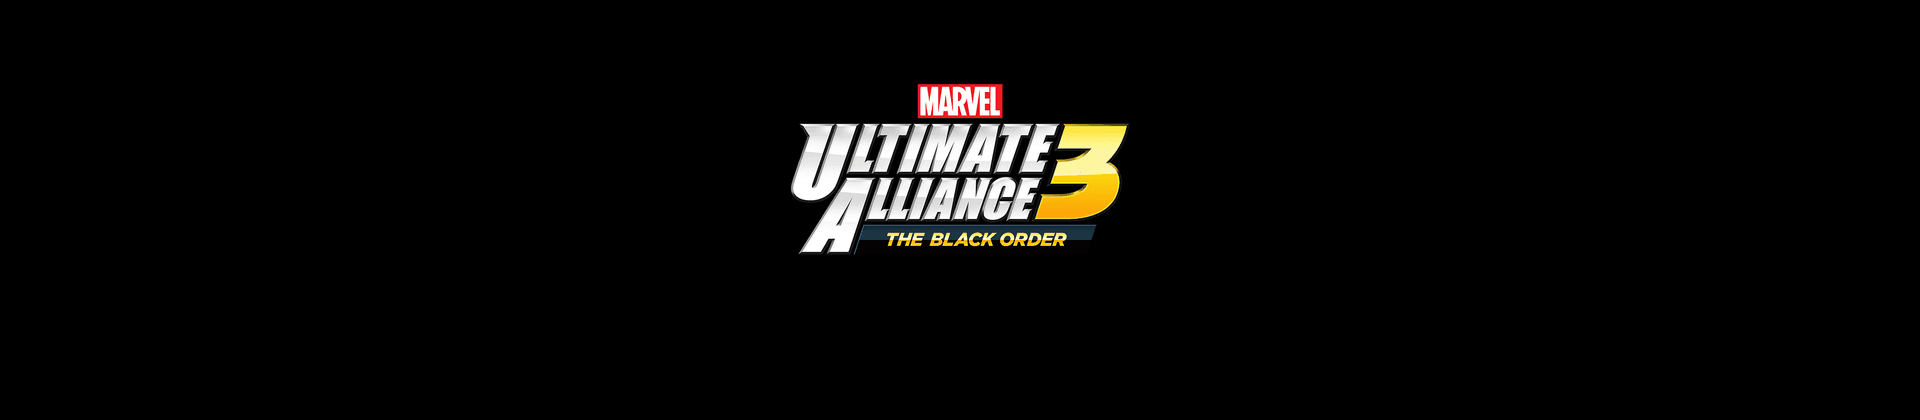 Marvel Ultimate Alliance 3 Game Logo